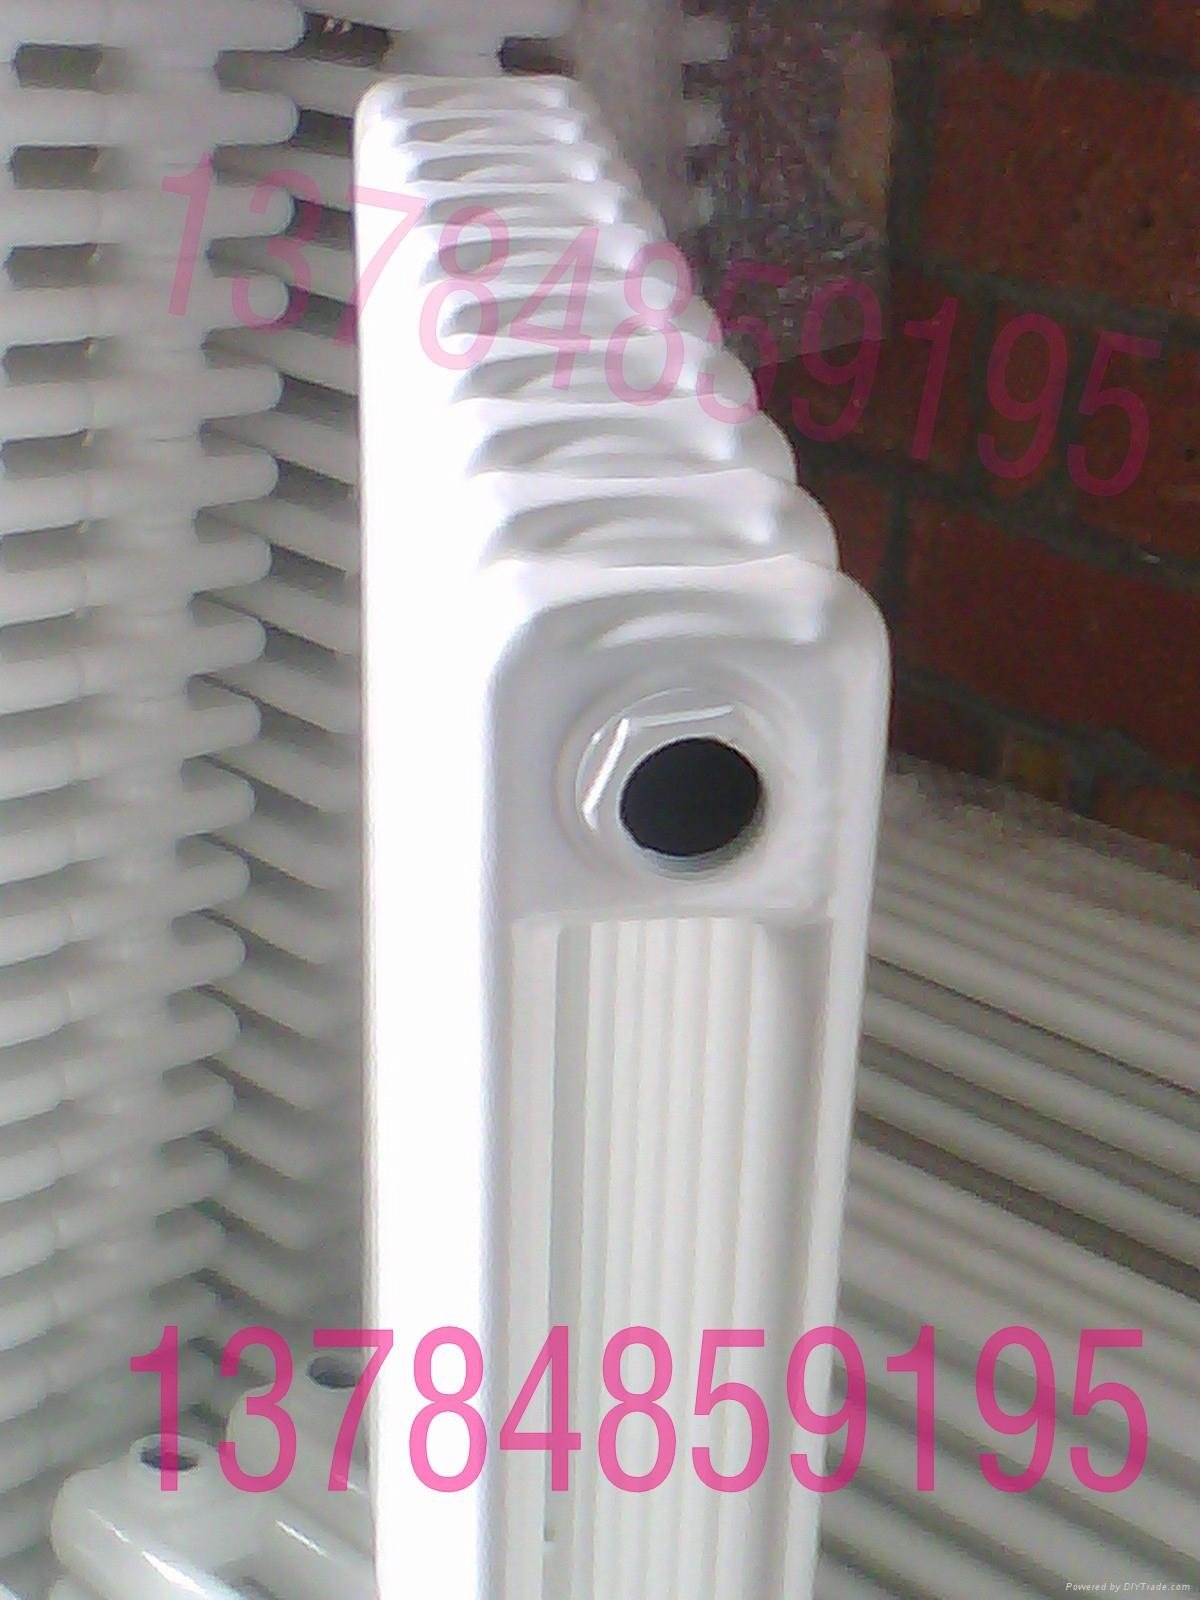 SCGGZT2-1.0/X-1.0型鋼制柱形暖氣片散熱器鋼制柱型散熱器 4